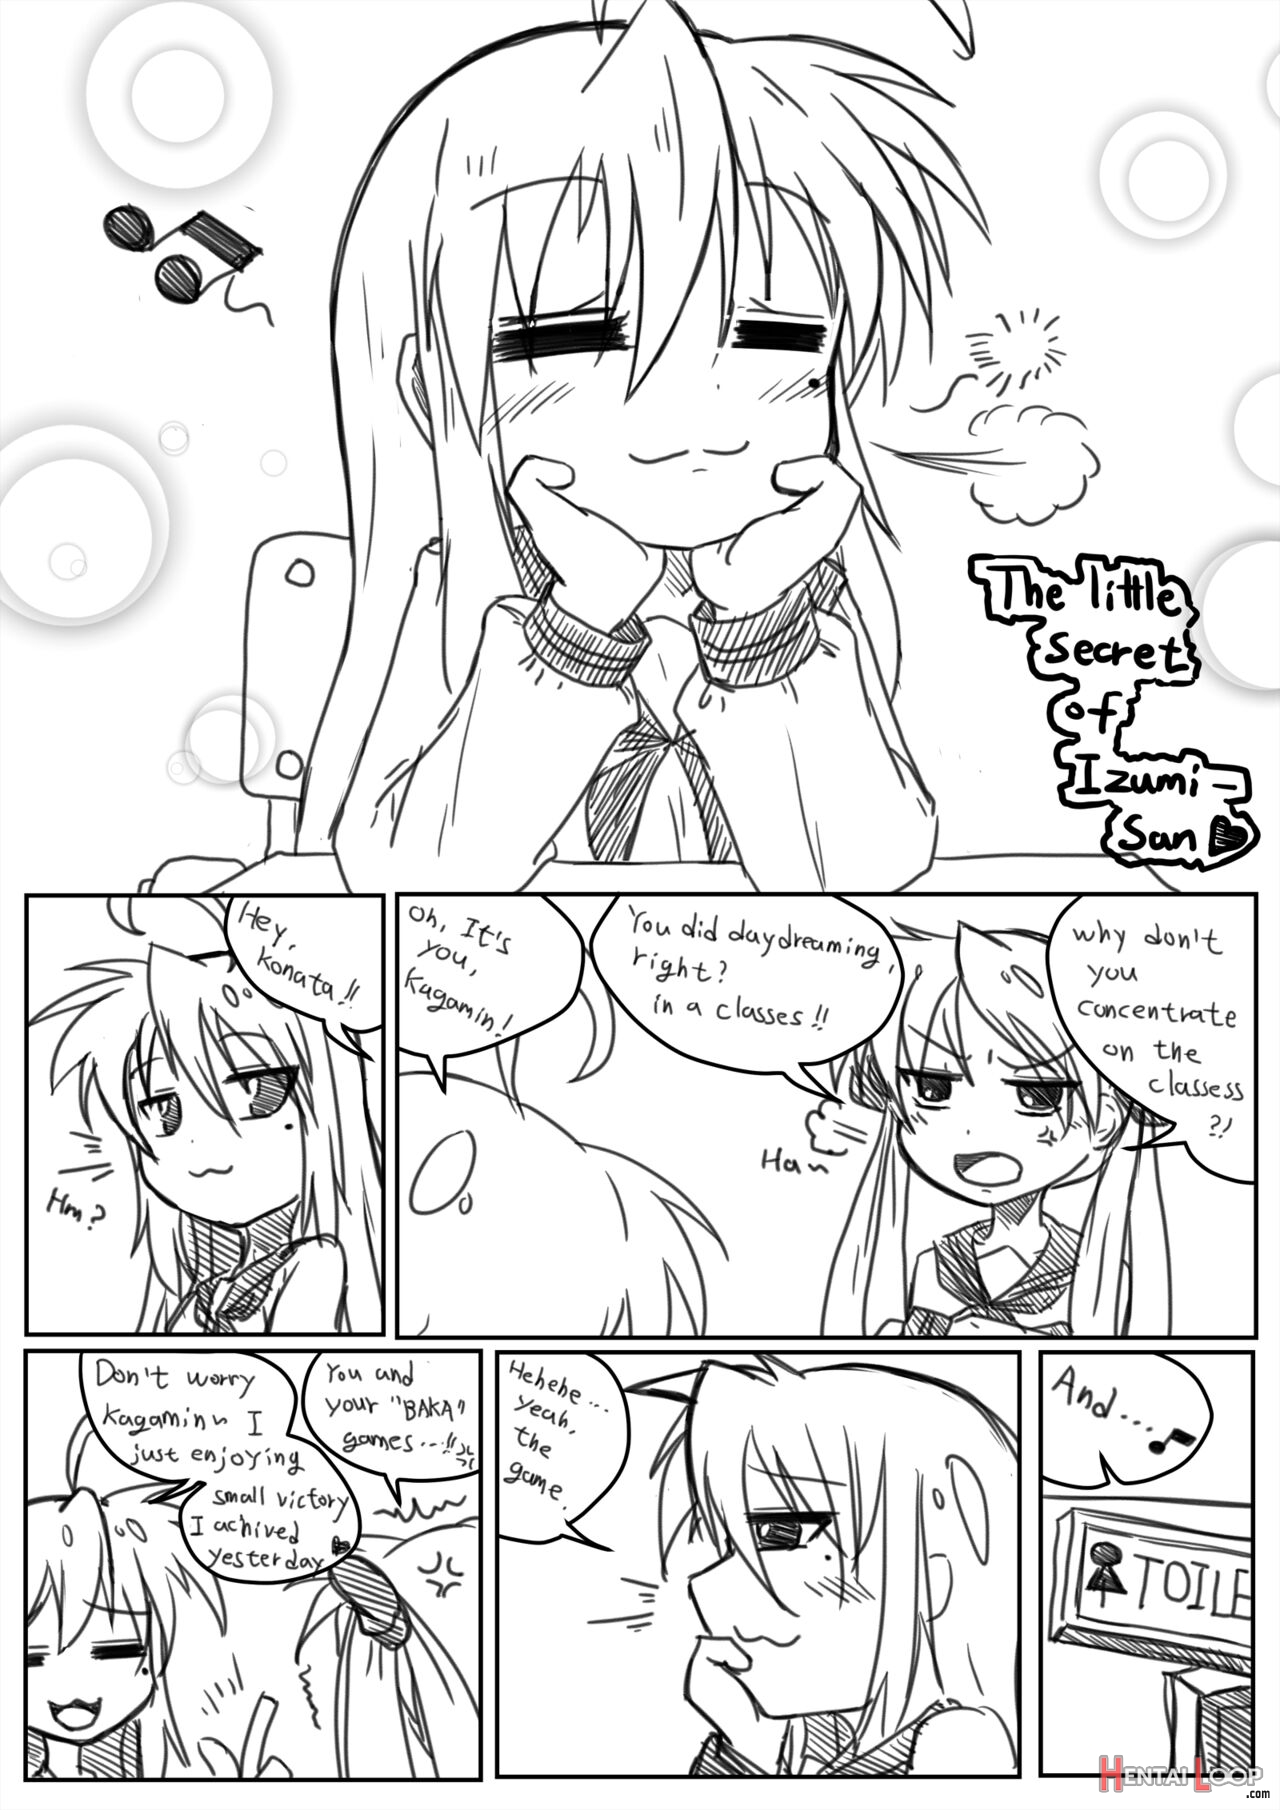 The Little Secret Of Izumi-san page 1